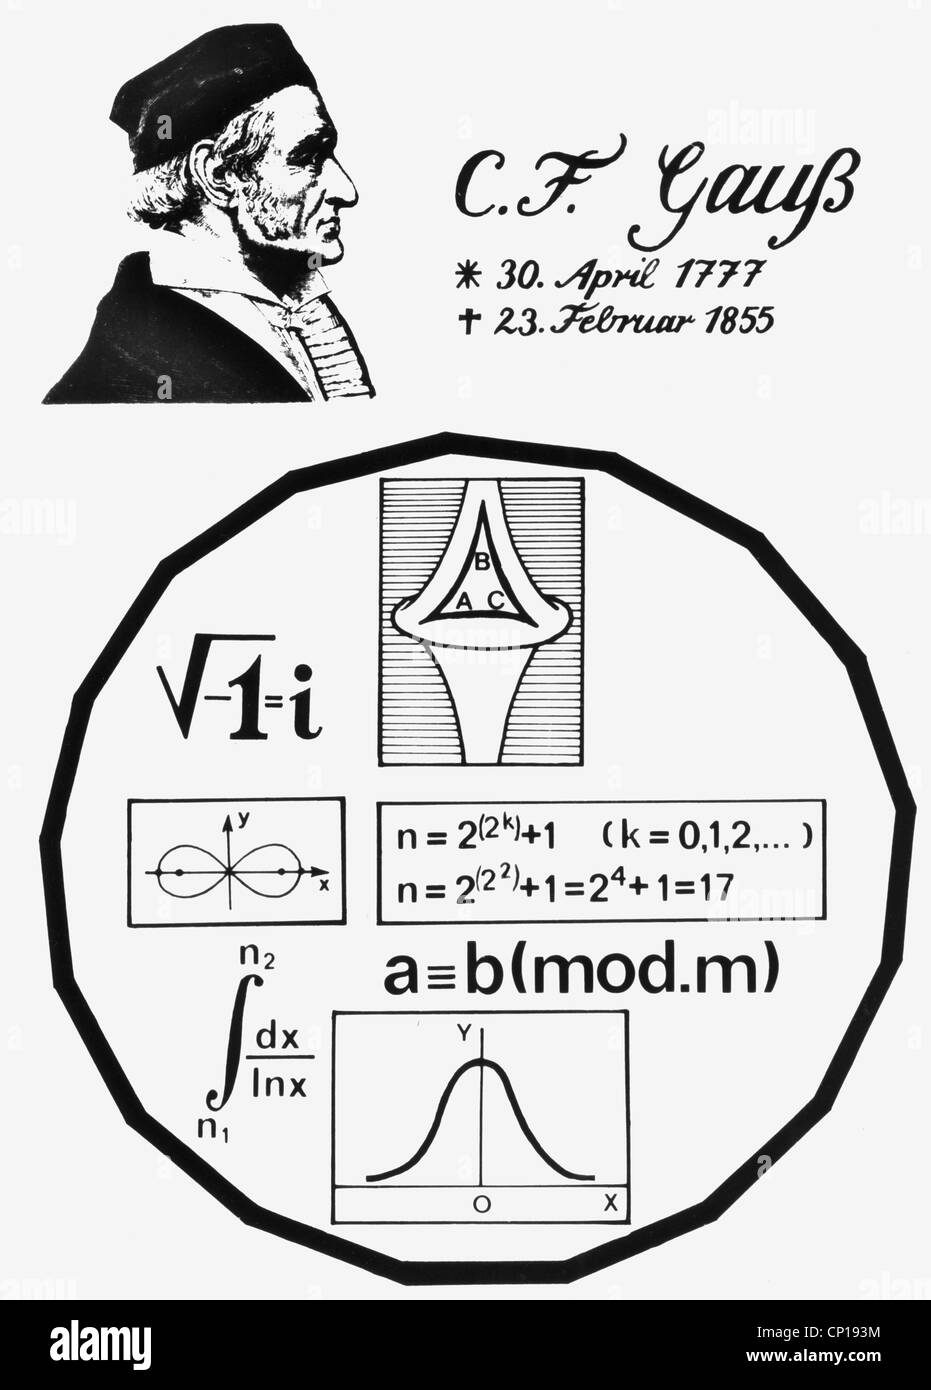 Gauß, Karl Friedrich, 1777 - 1855, German scientist (mathematician), portrait, and graphical sheme of his fundamental algebraic formulas, , Stock Photo